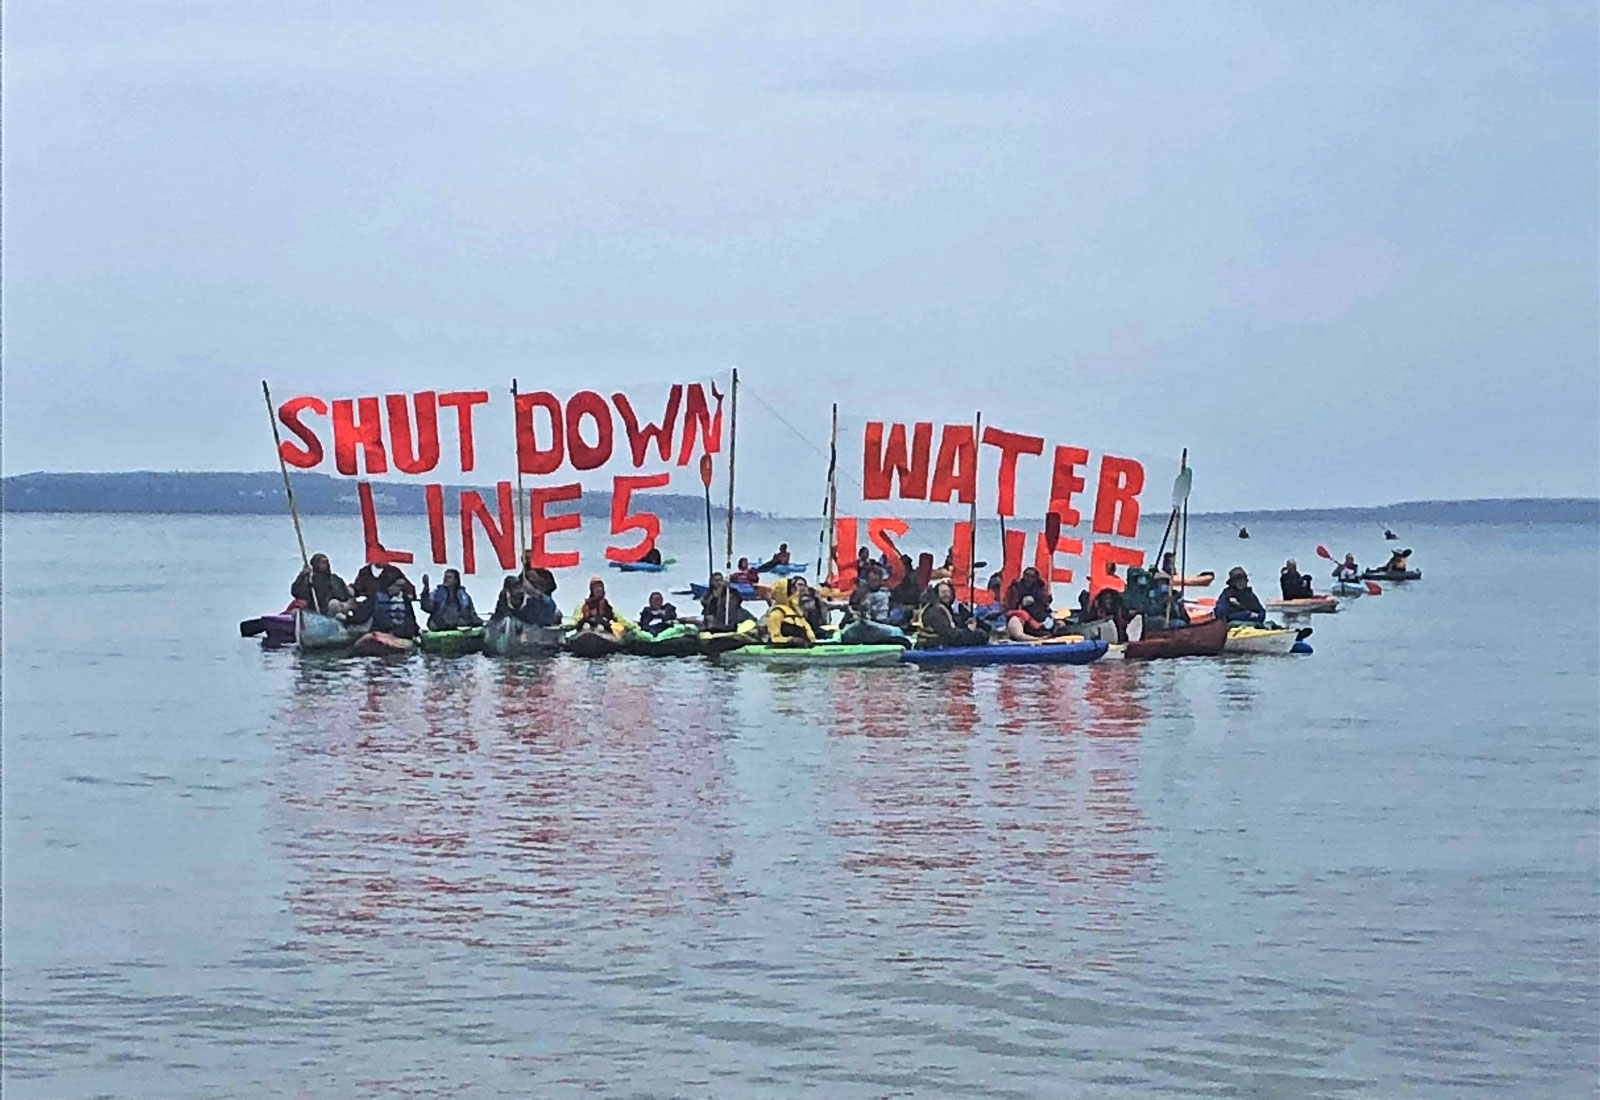 People on kayaks protesting Line 5